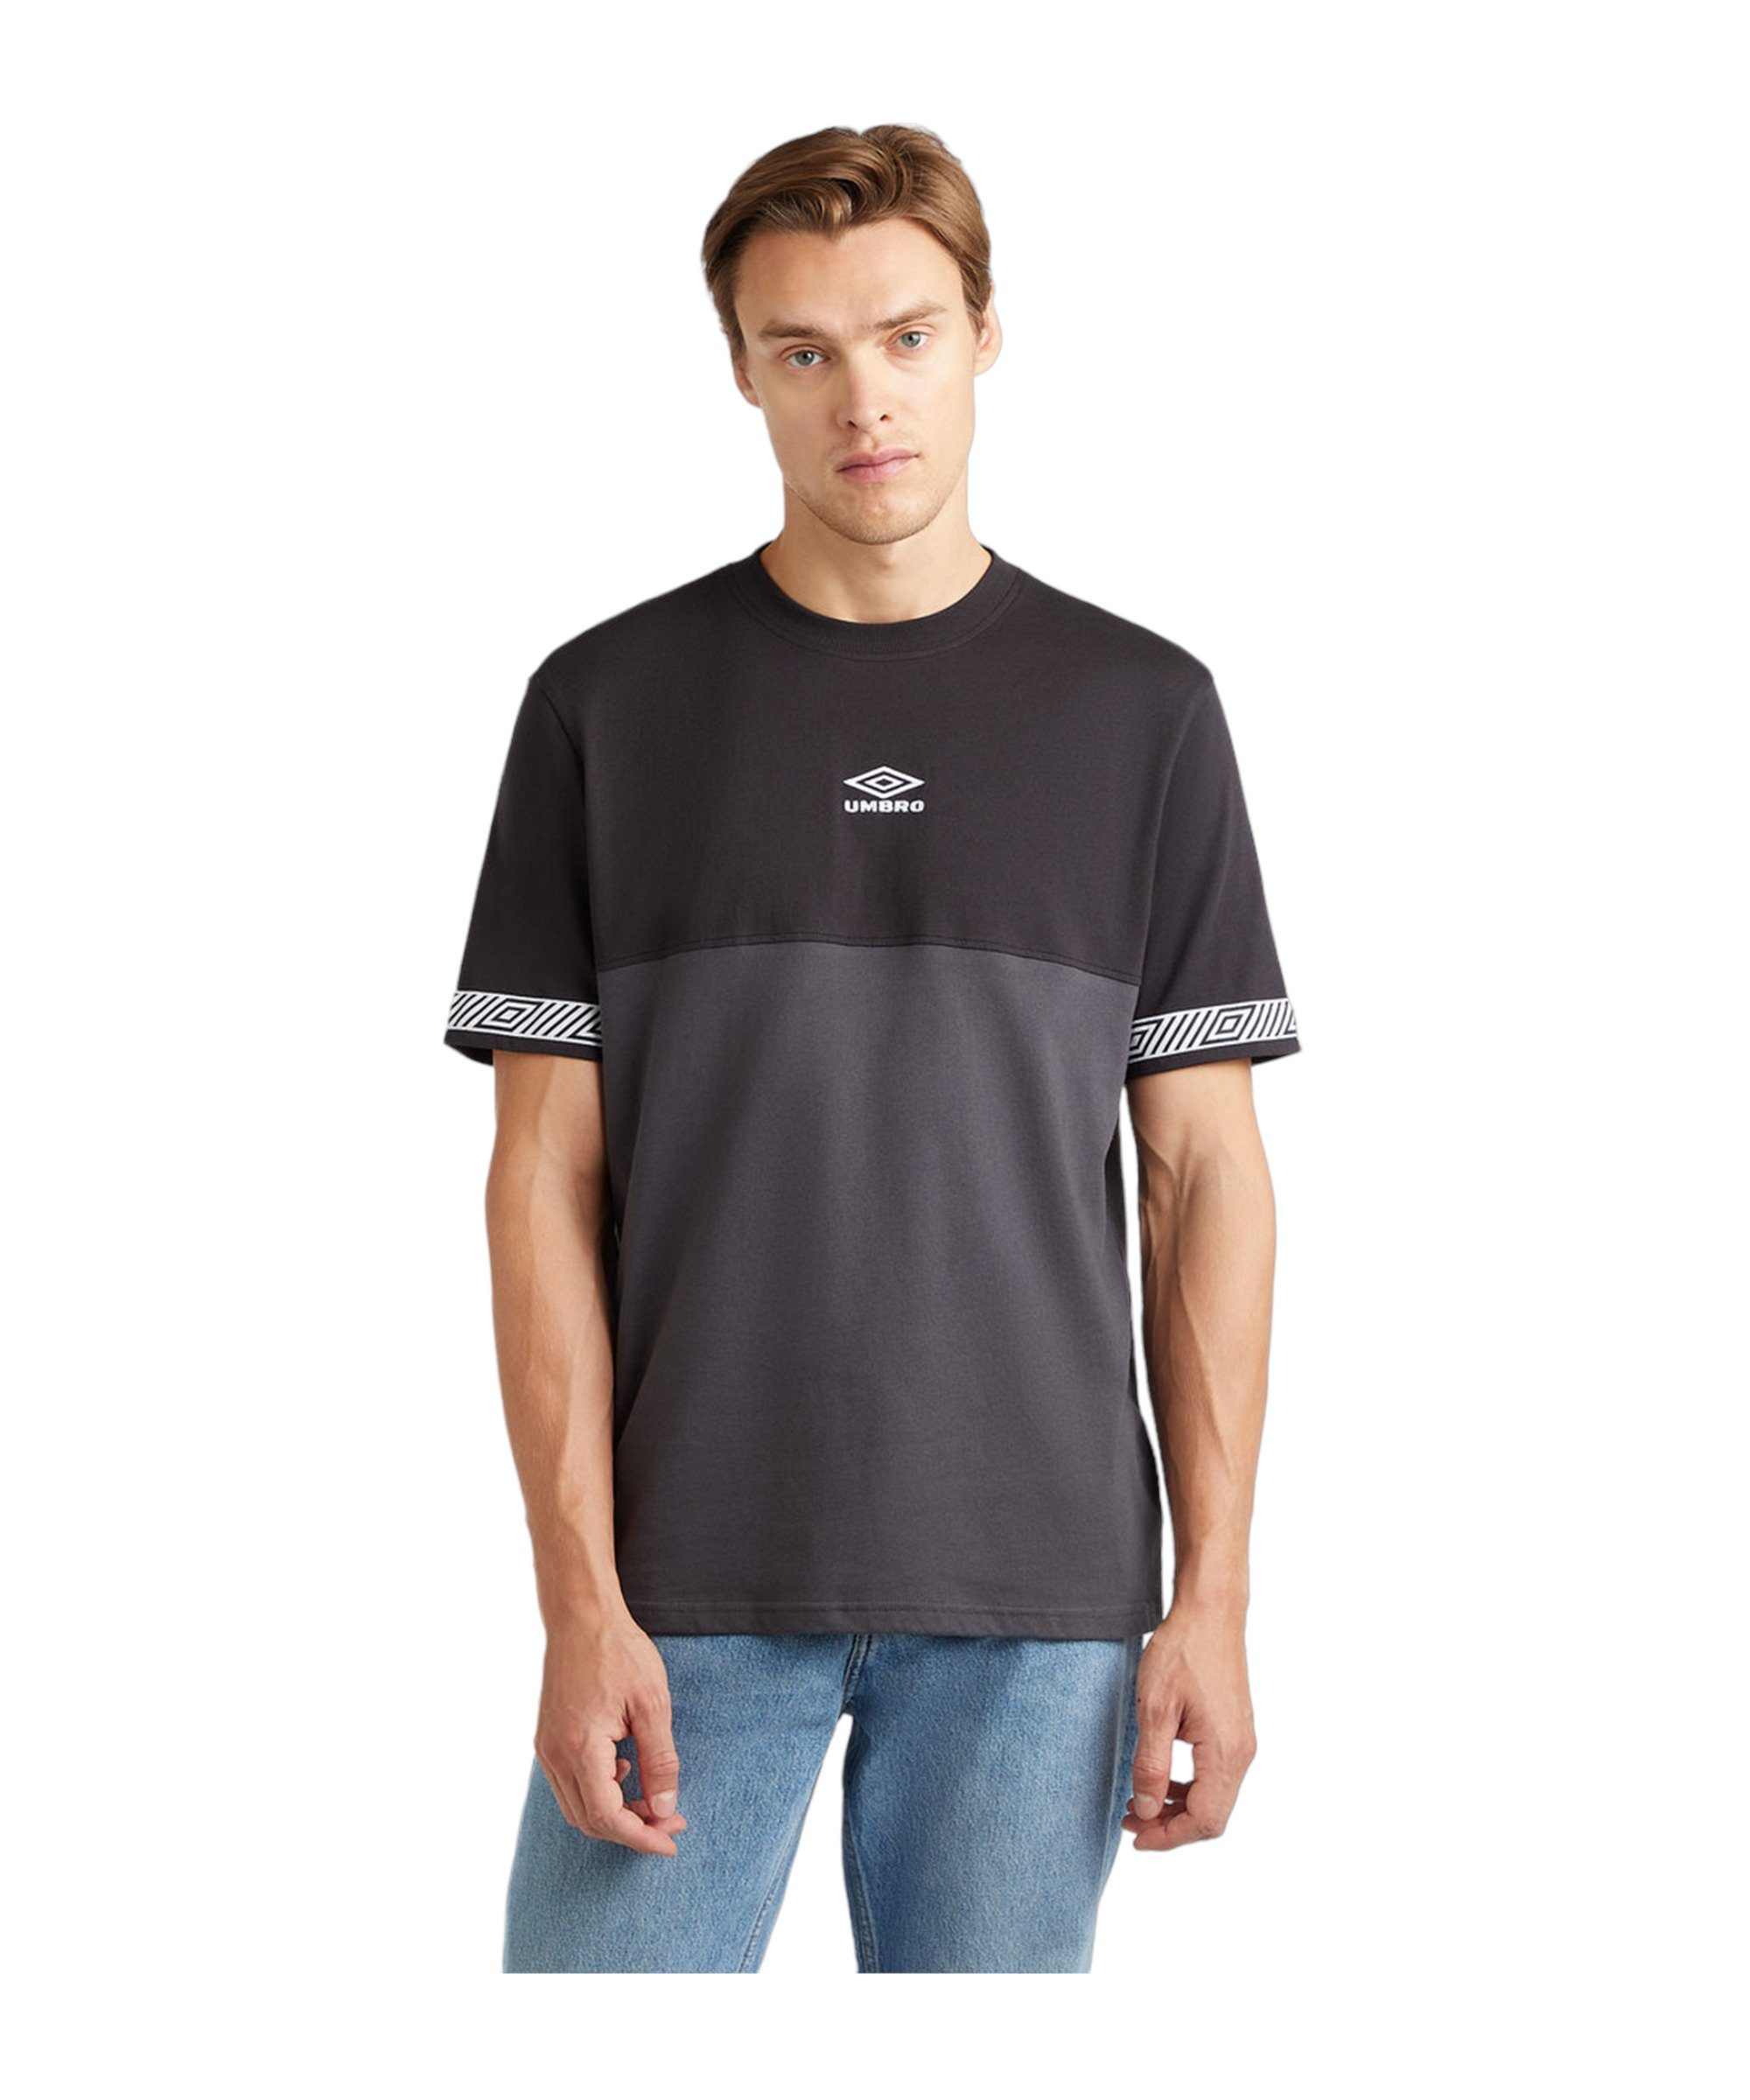 Umbro T-Shirt Sports Style Club Crew T-Shirt default grauschwarz